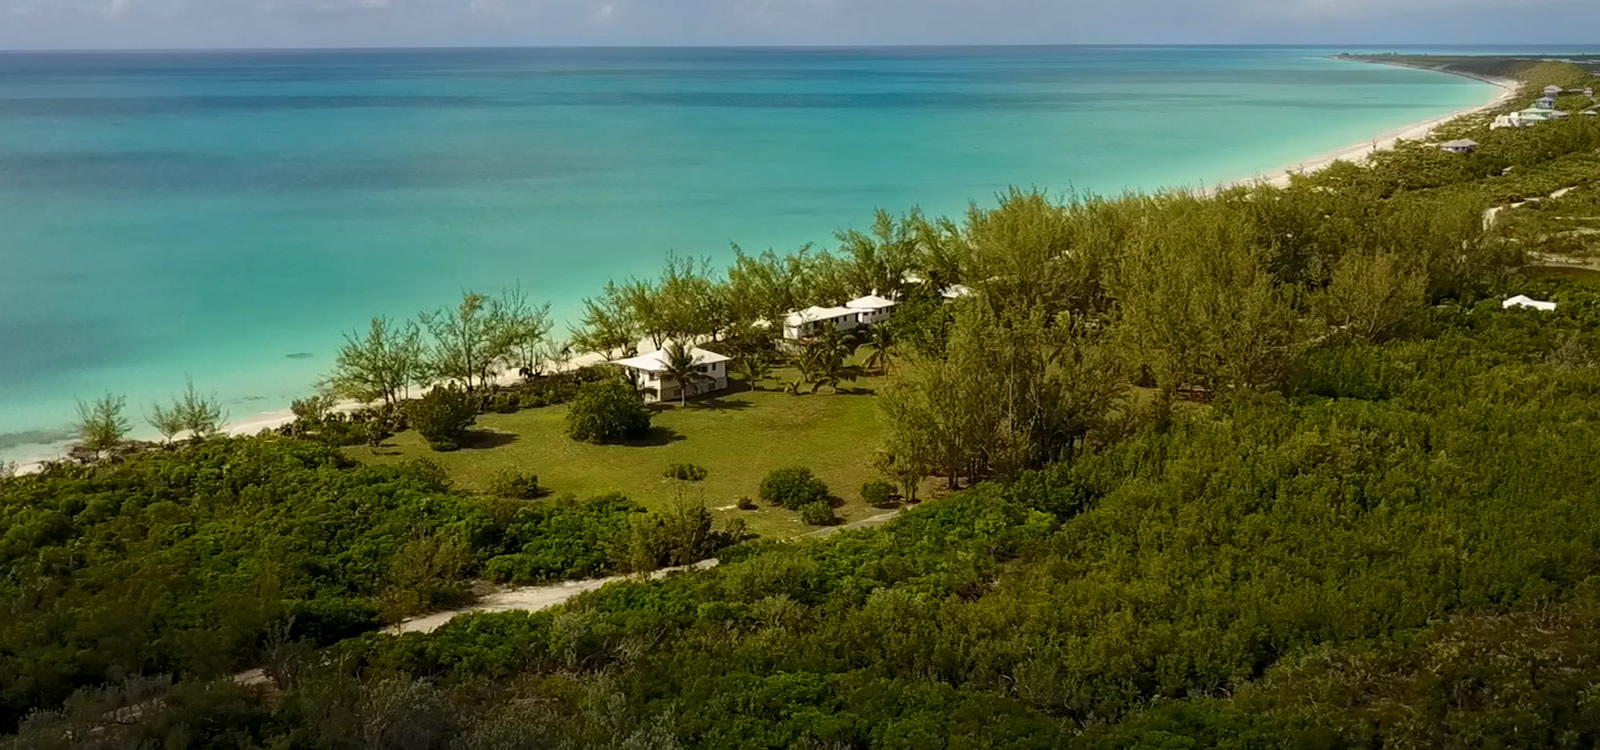 11Key Beachfront Hotel for Sale, Cat Island, Bahamas 7th Heaven